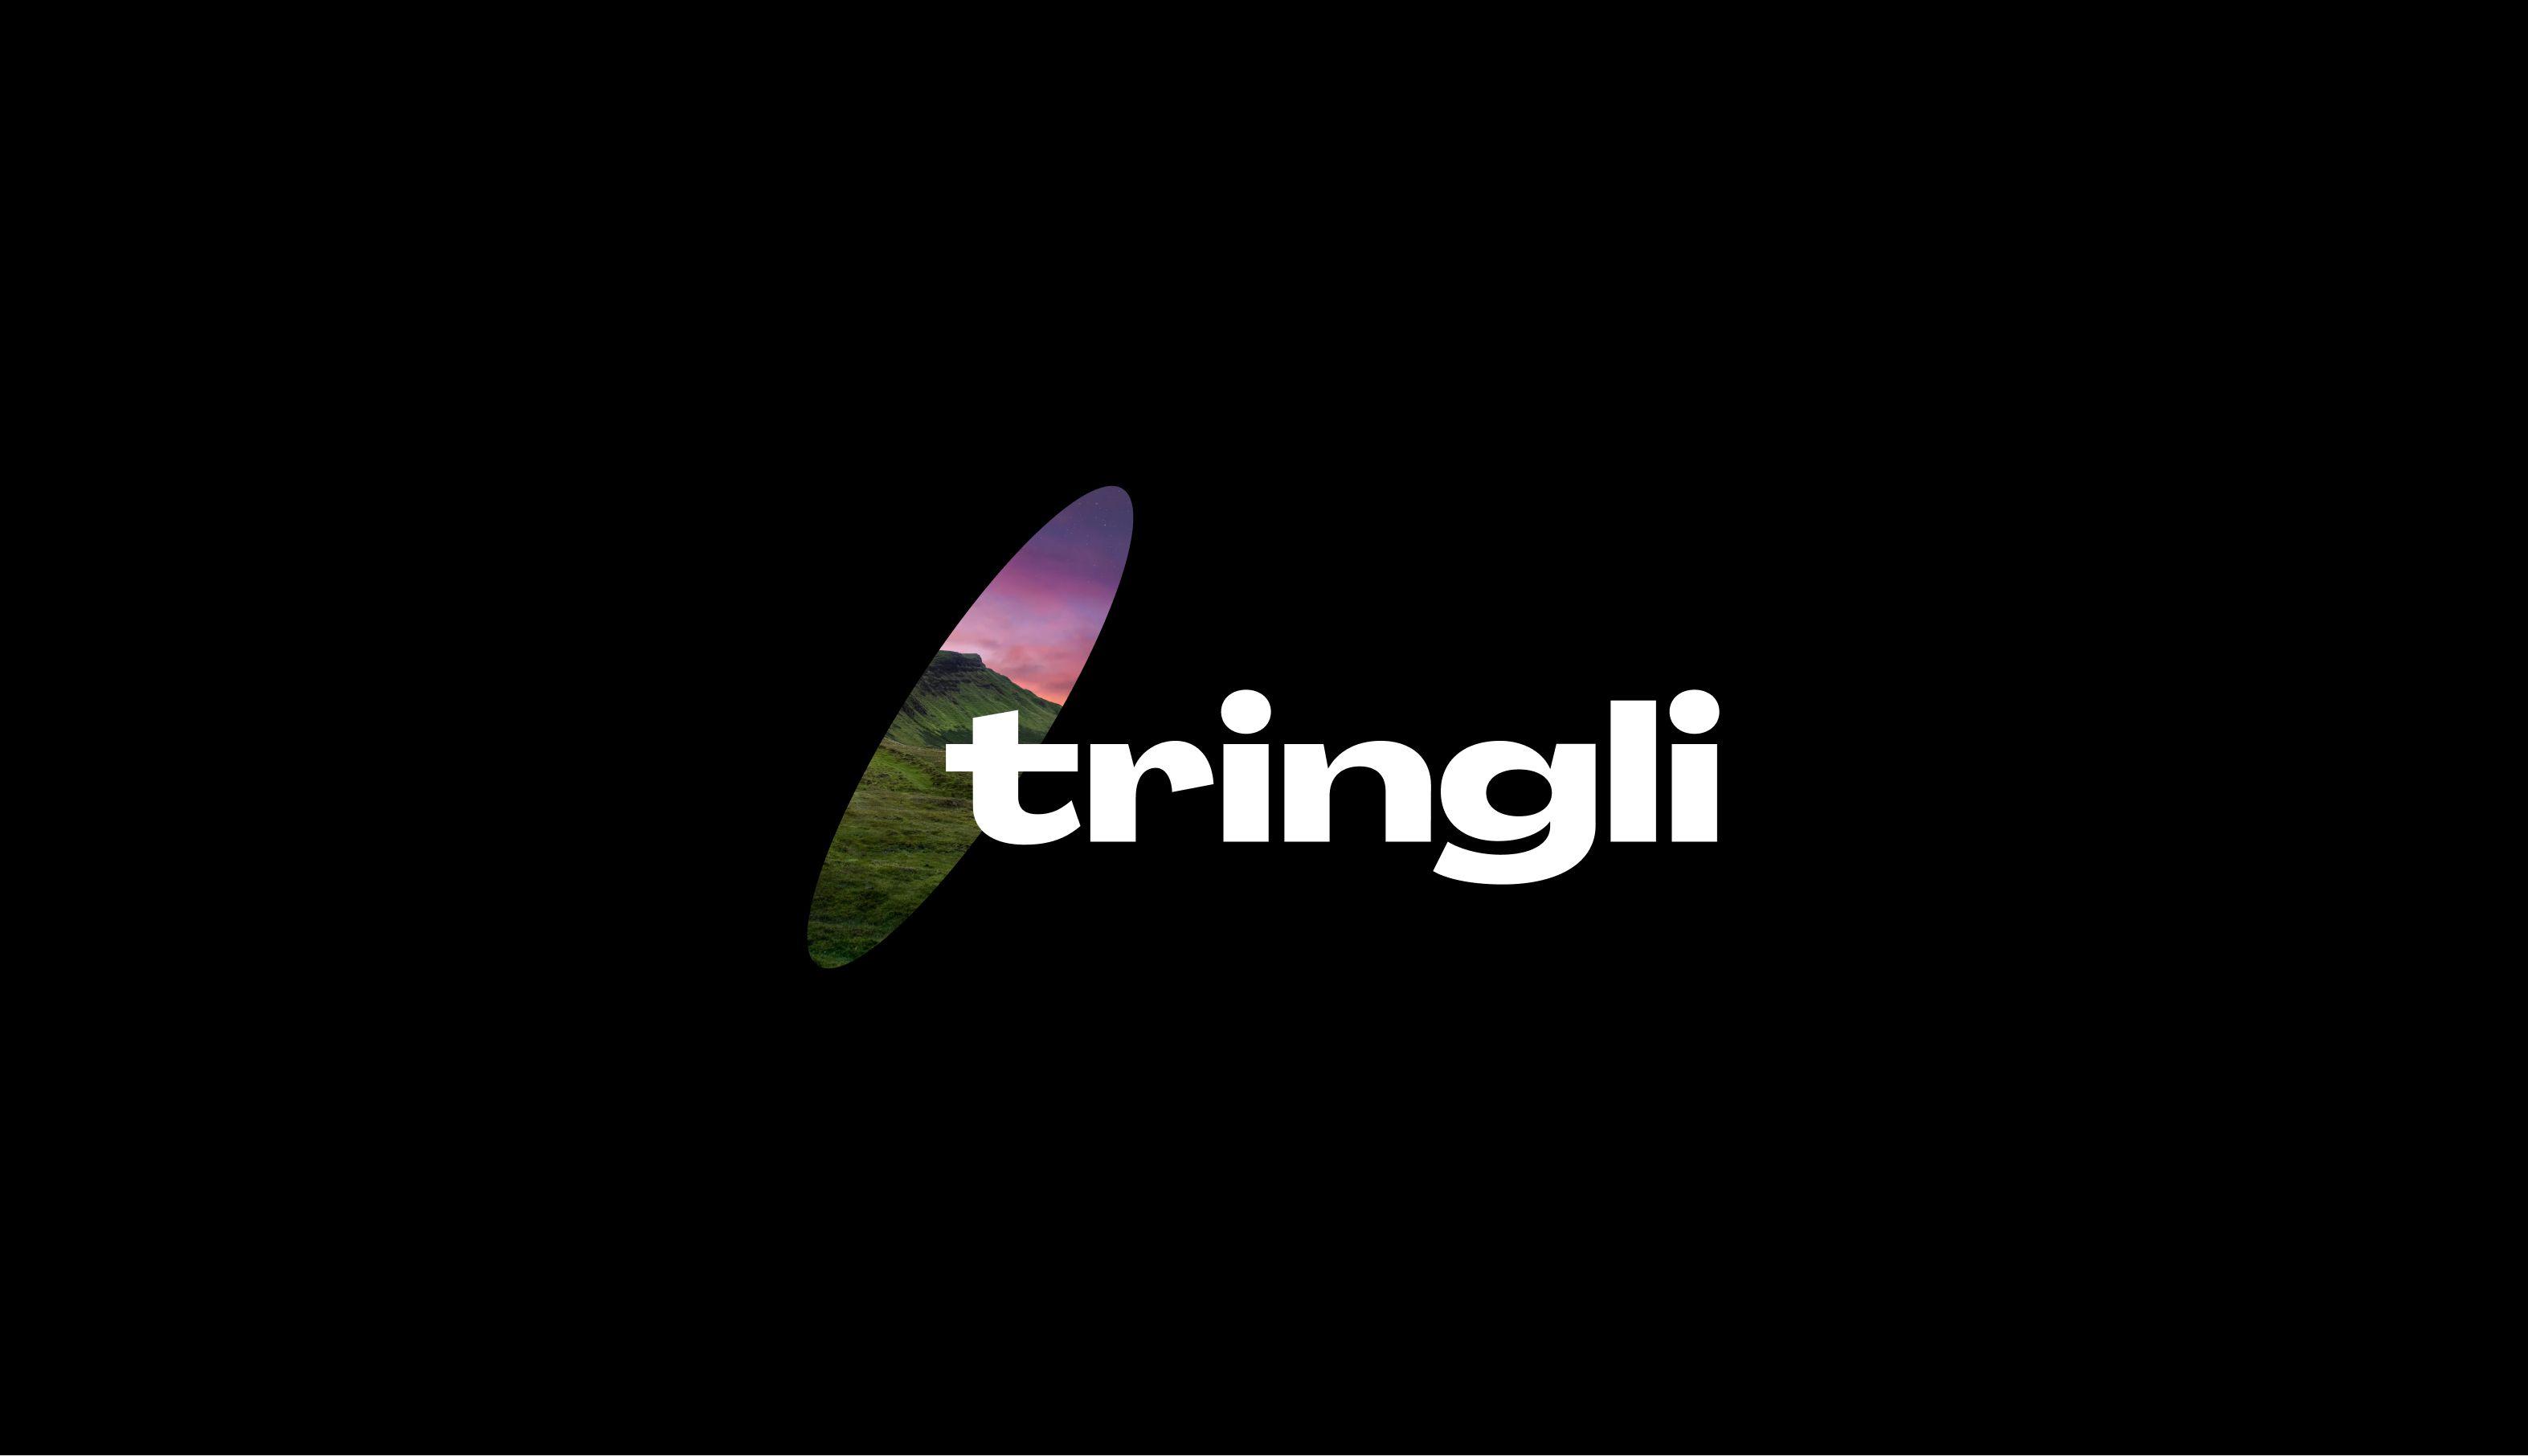 Tringli logo animation